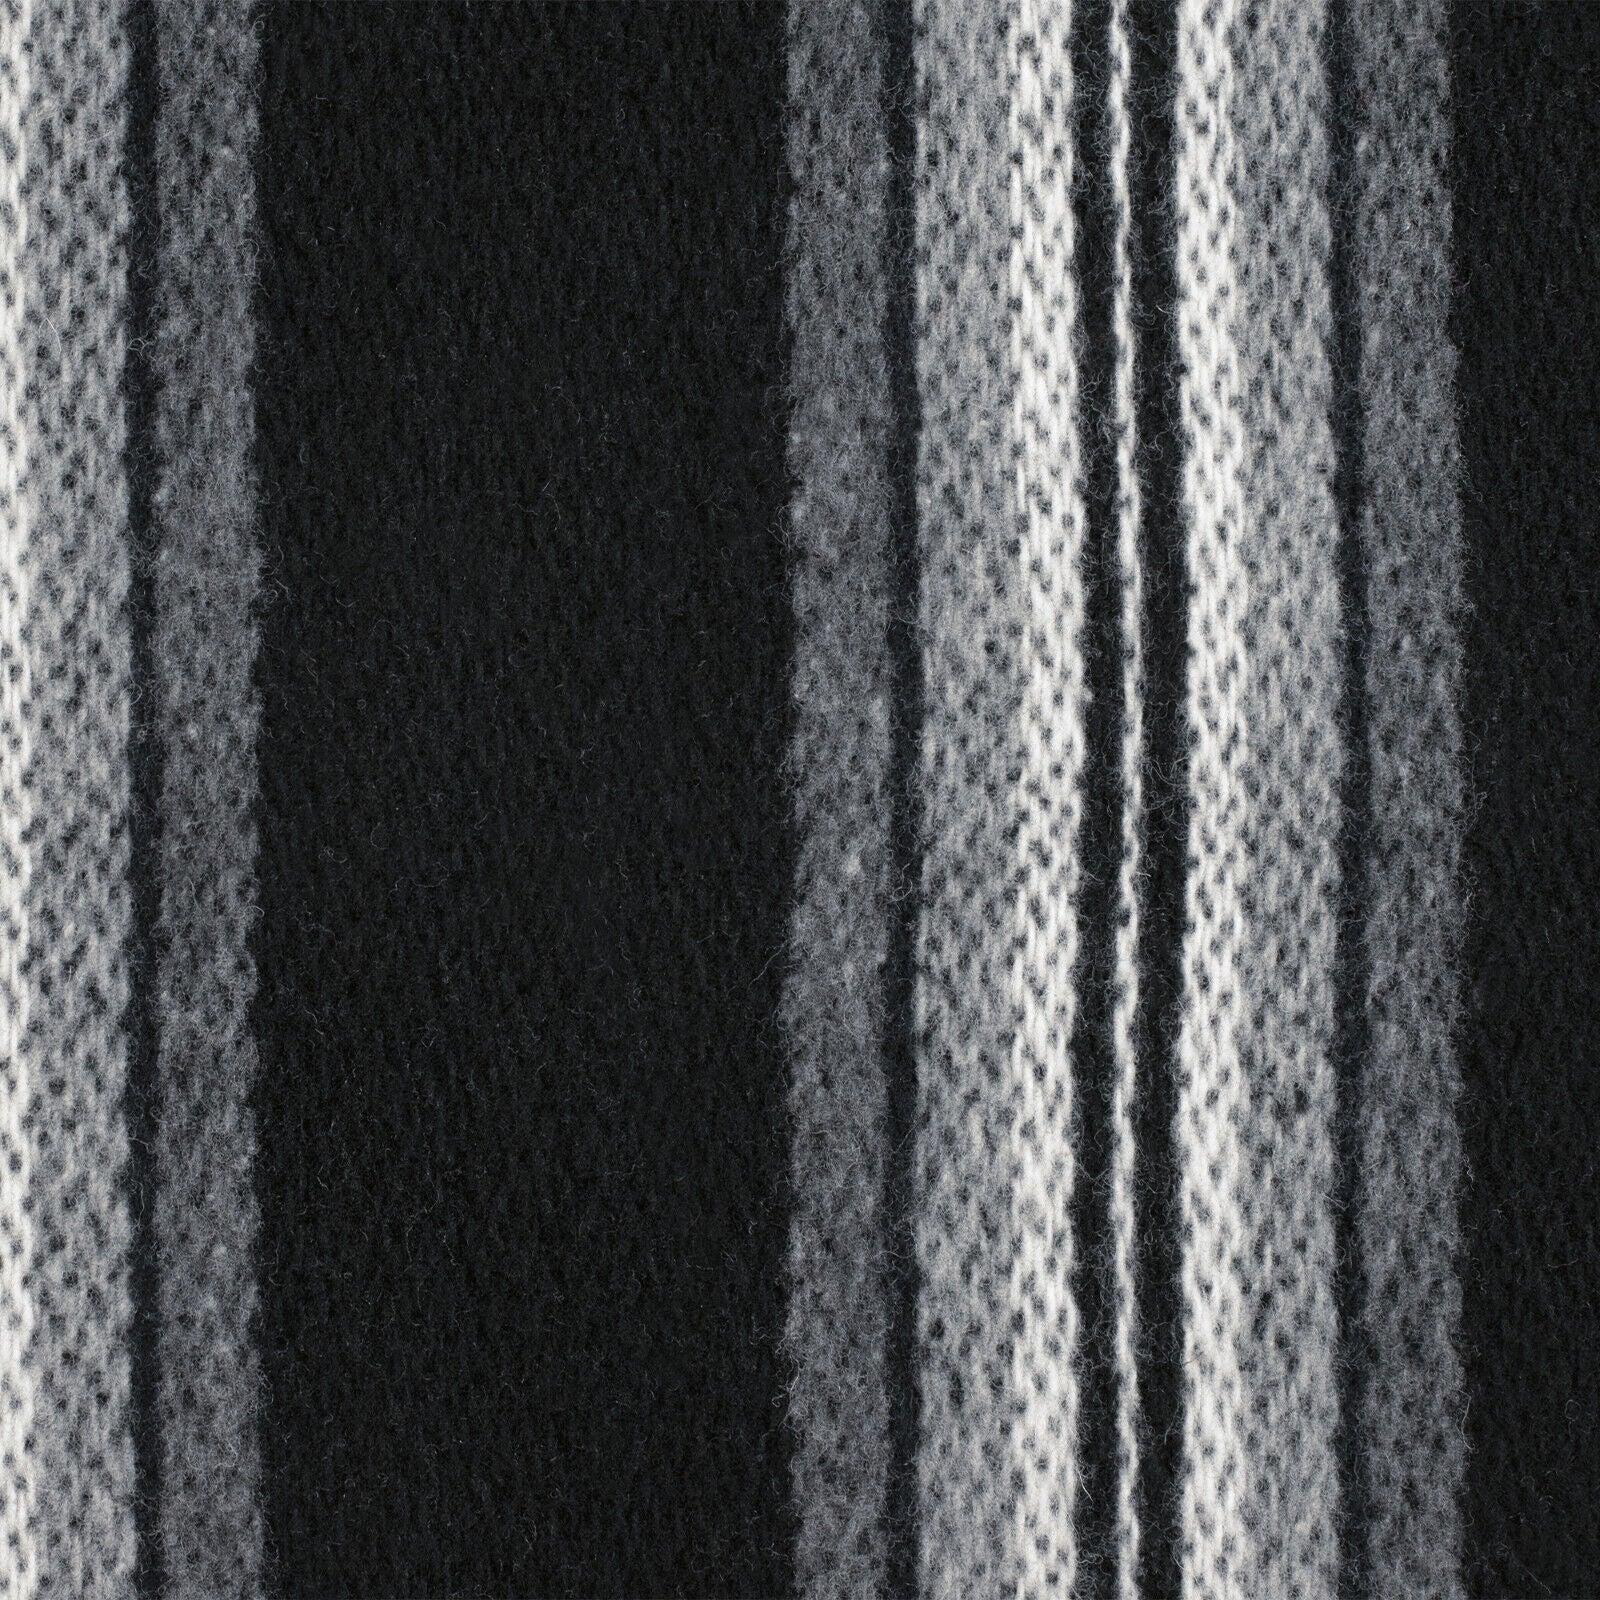 Parasa - Llama Wool Unisex South American Handwoven Hooded Poncho - black striped pattern